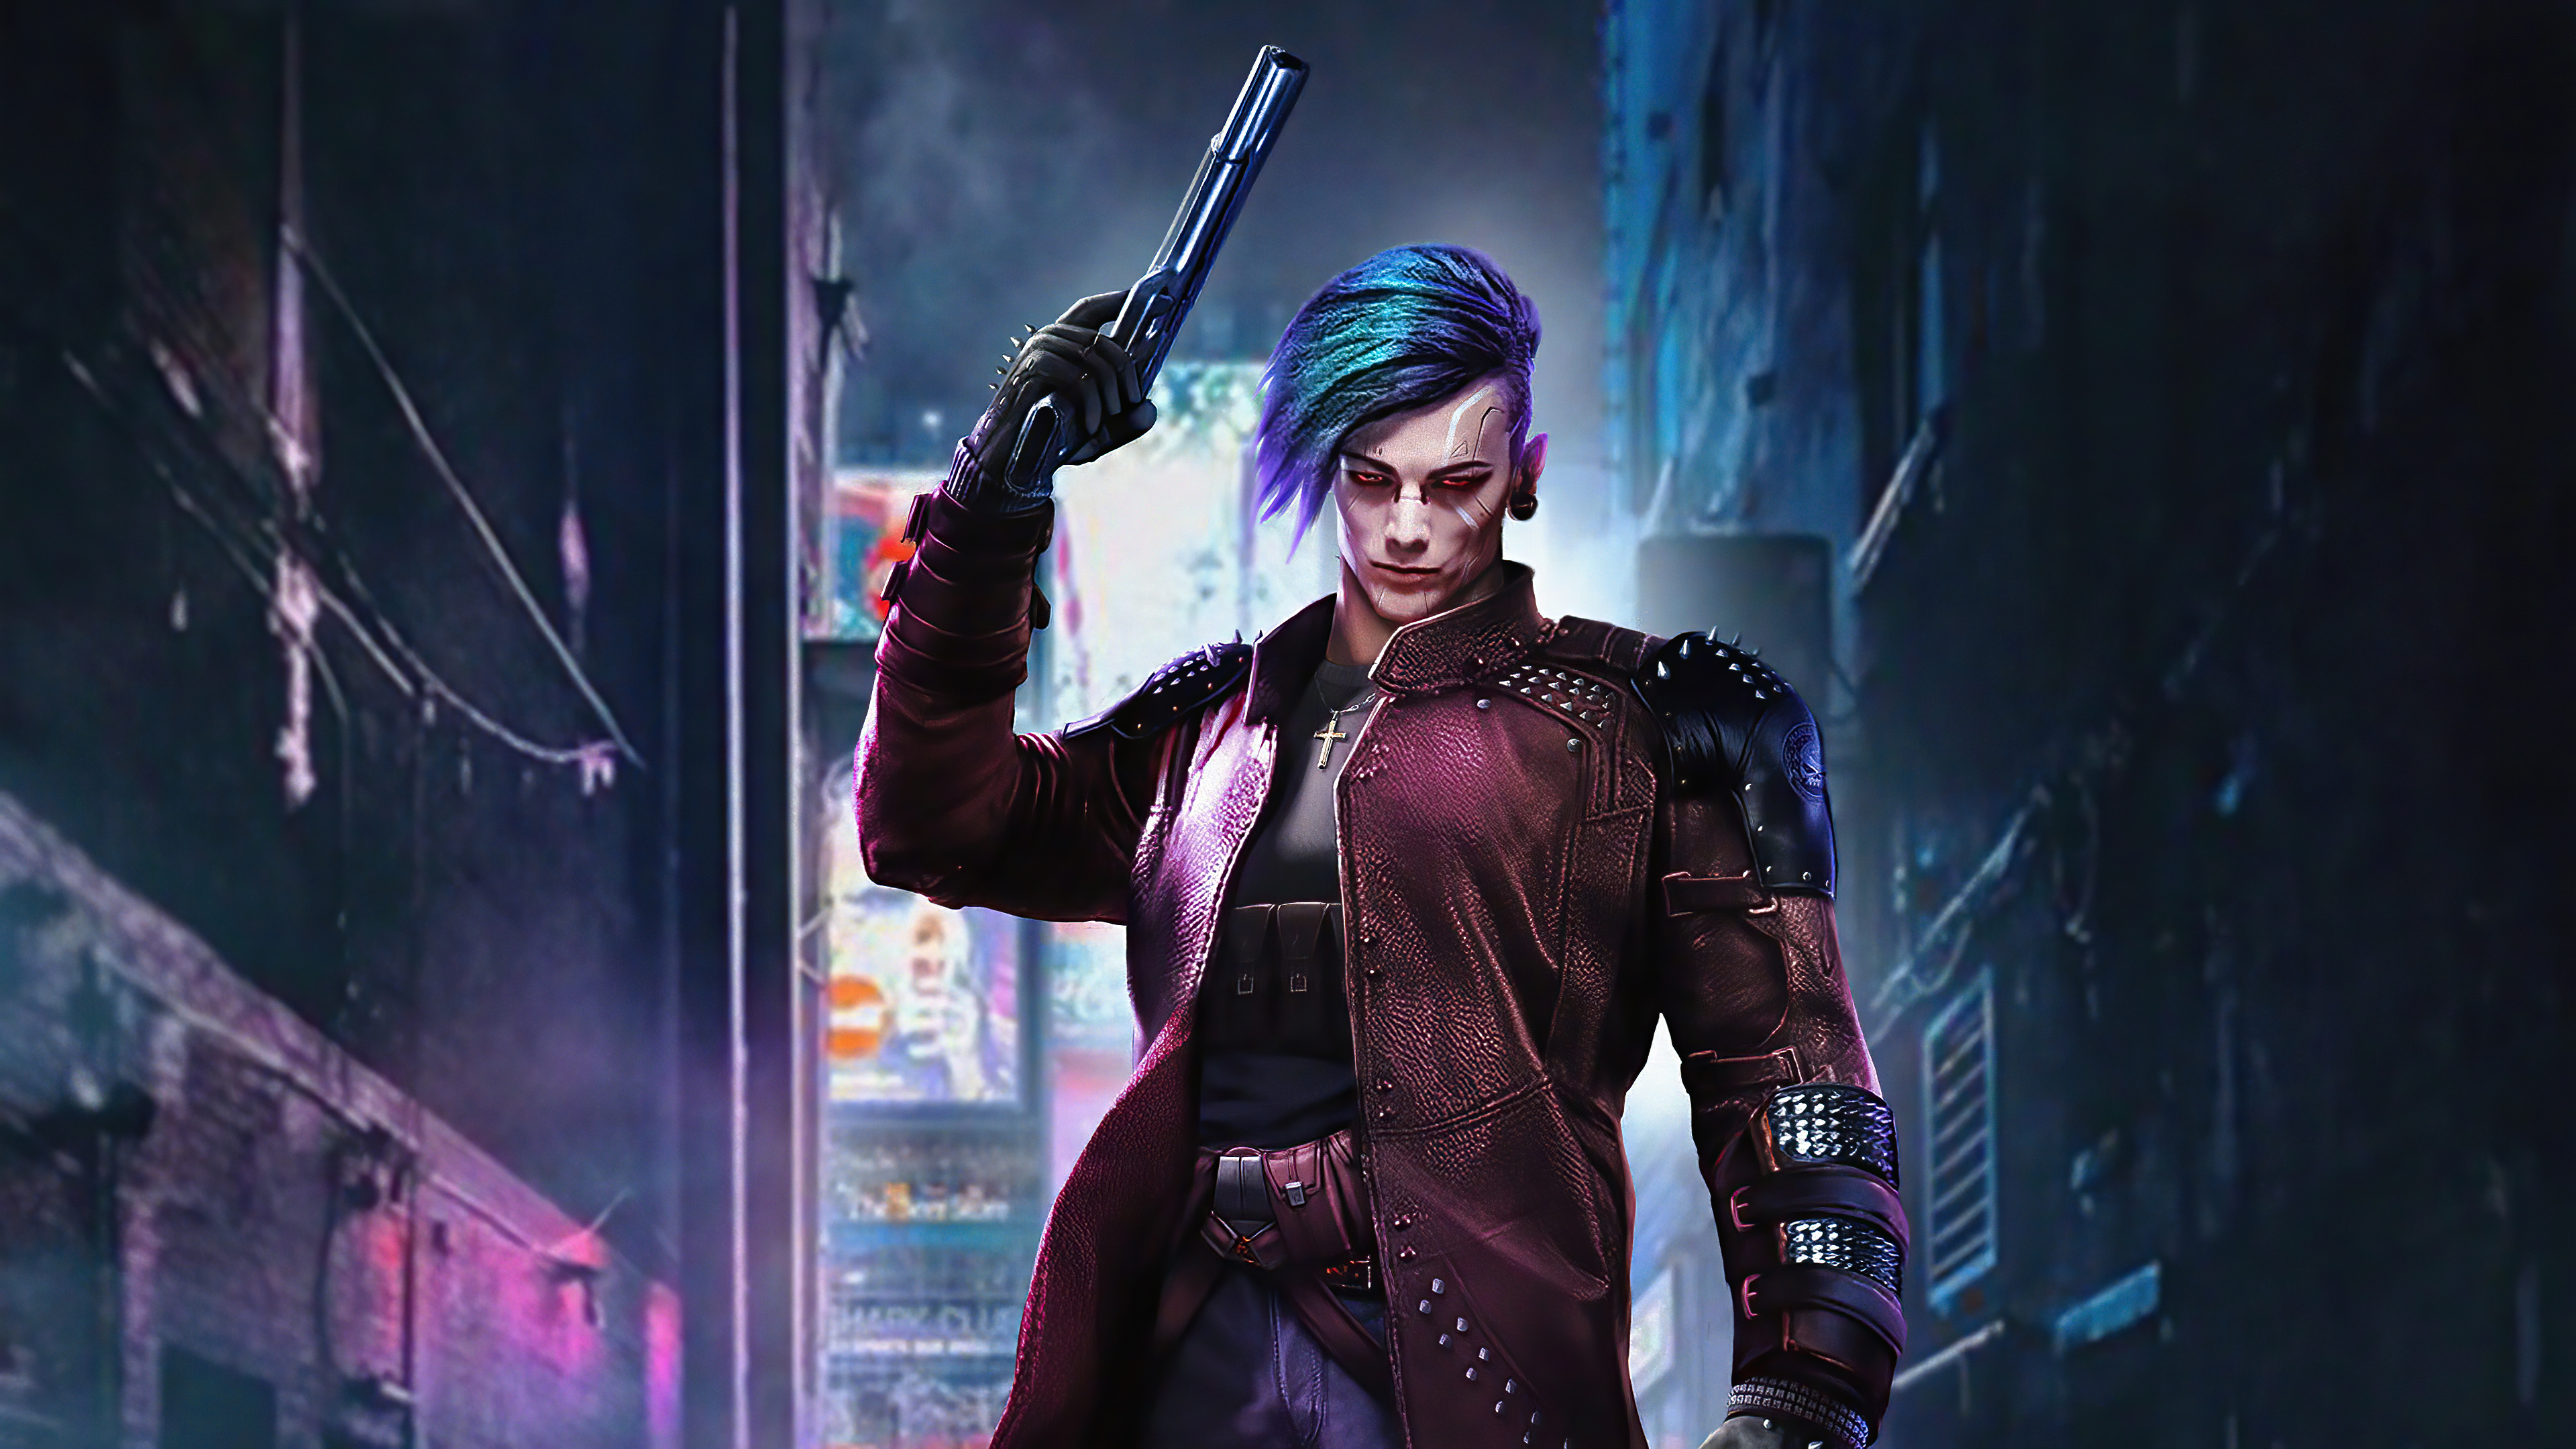 Futuristic City Man with Gun - Cyberpunk Live Wallpaper - free download